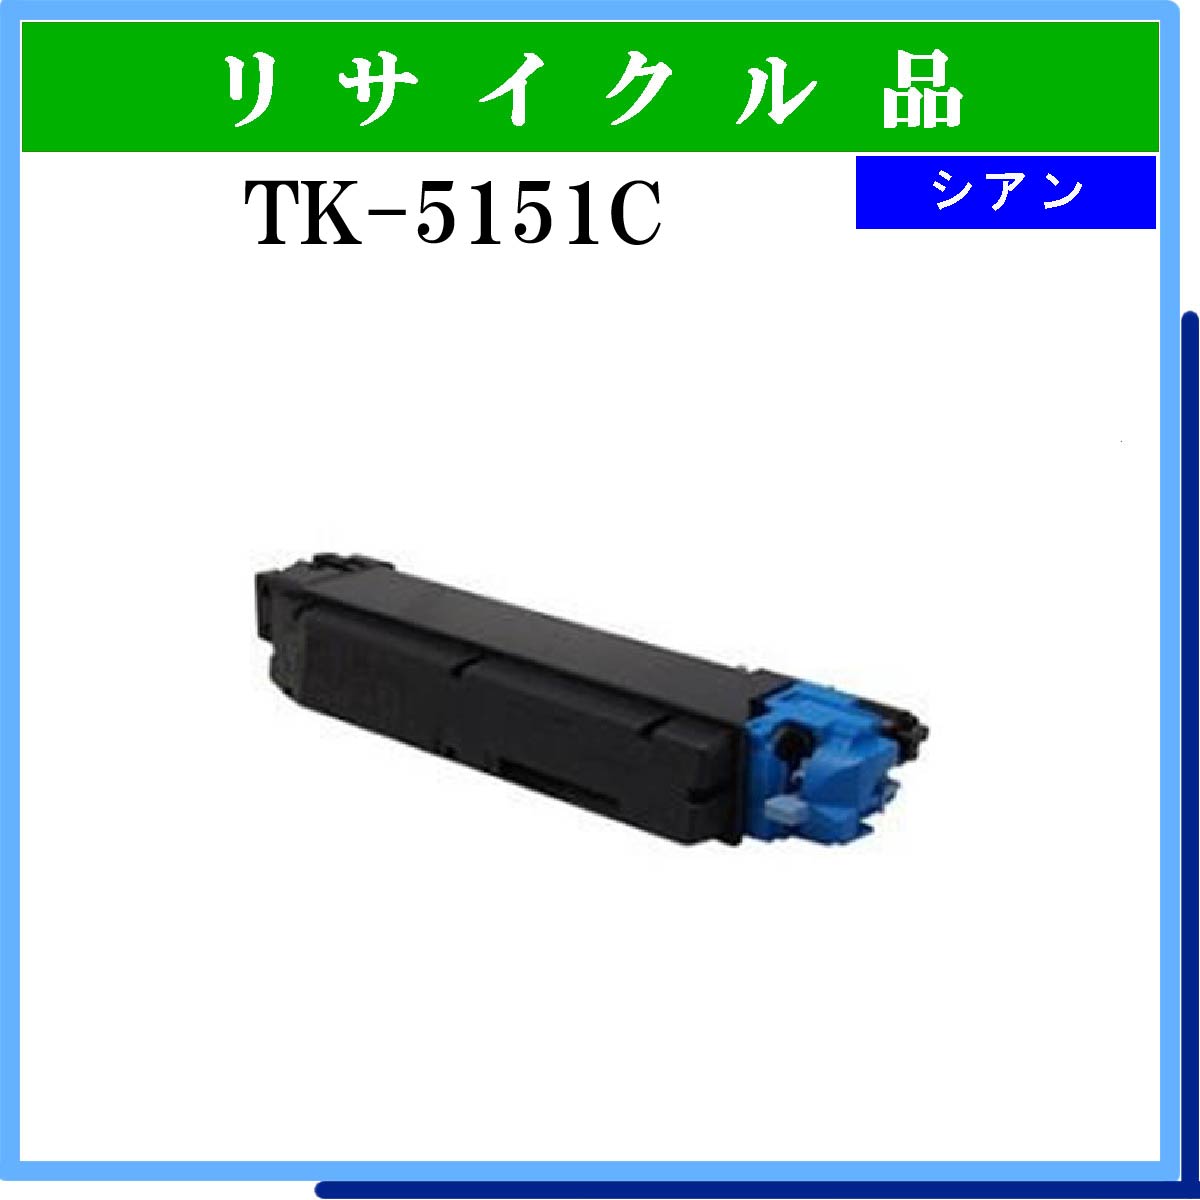 TK-5151C - ウインドウを閉じる